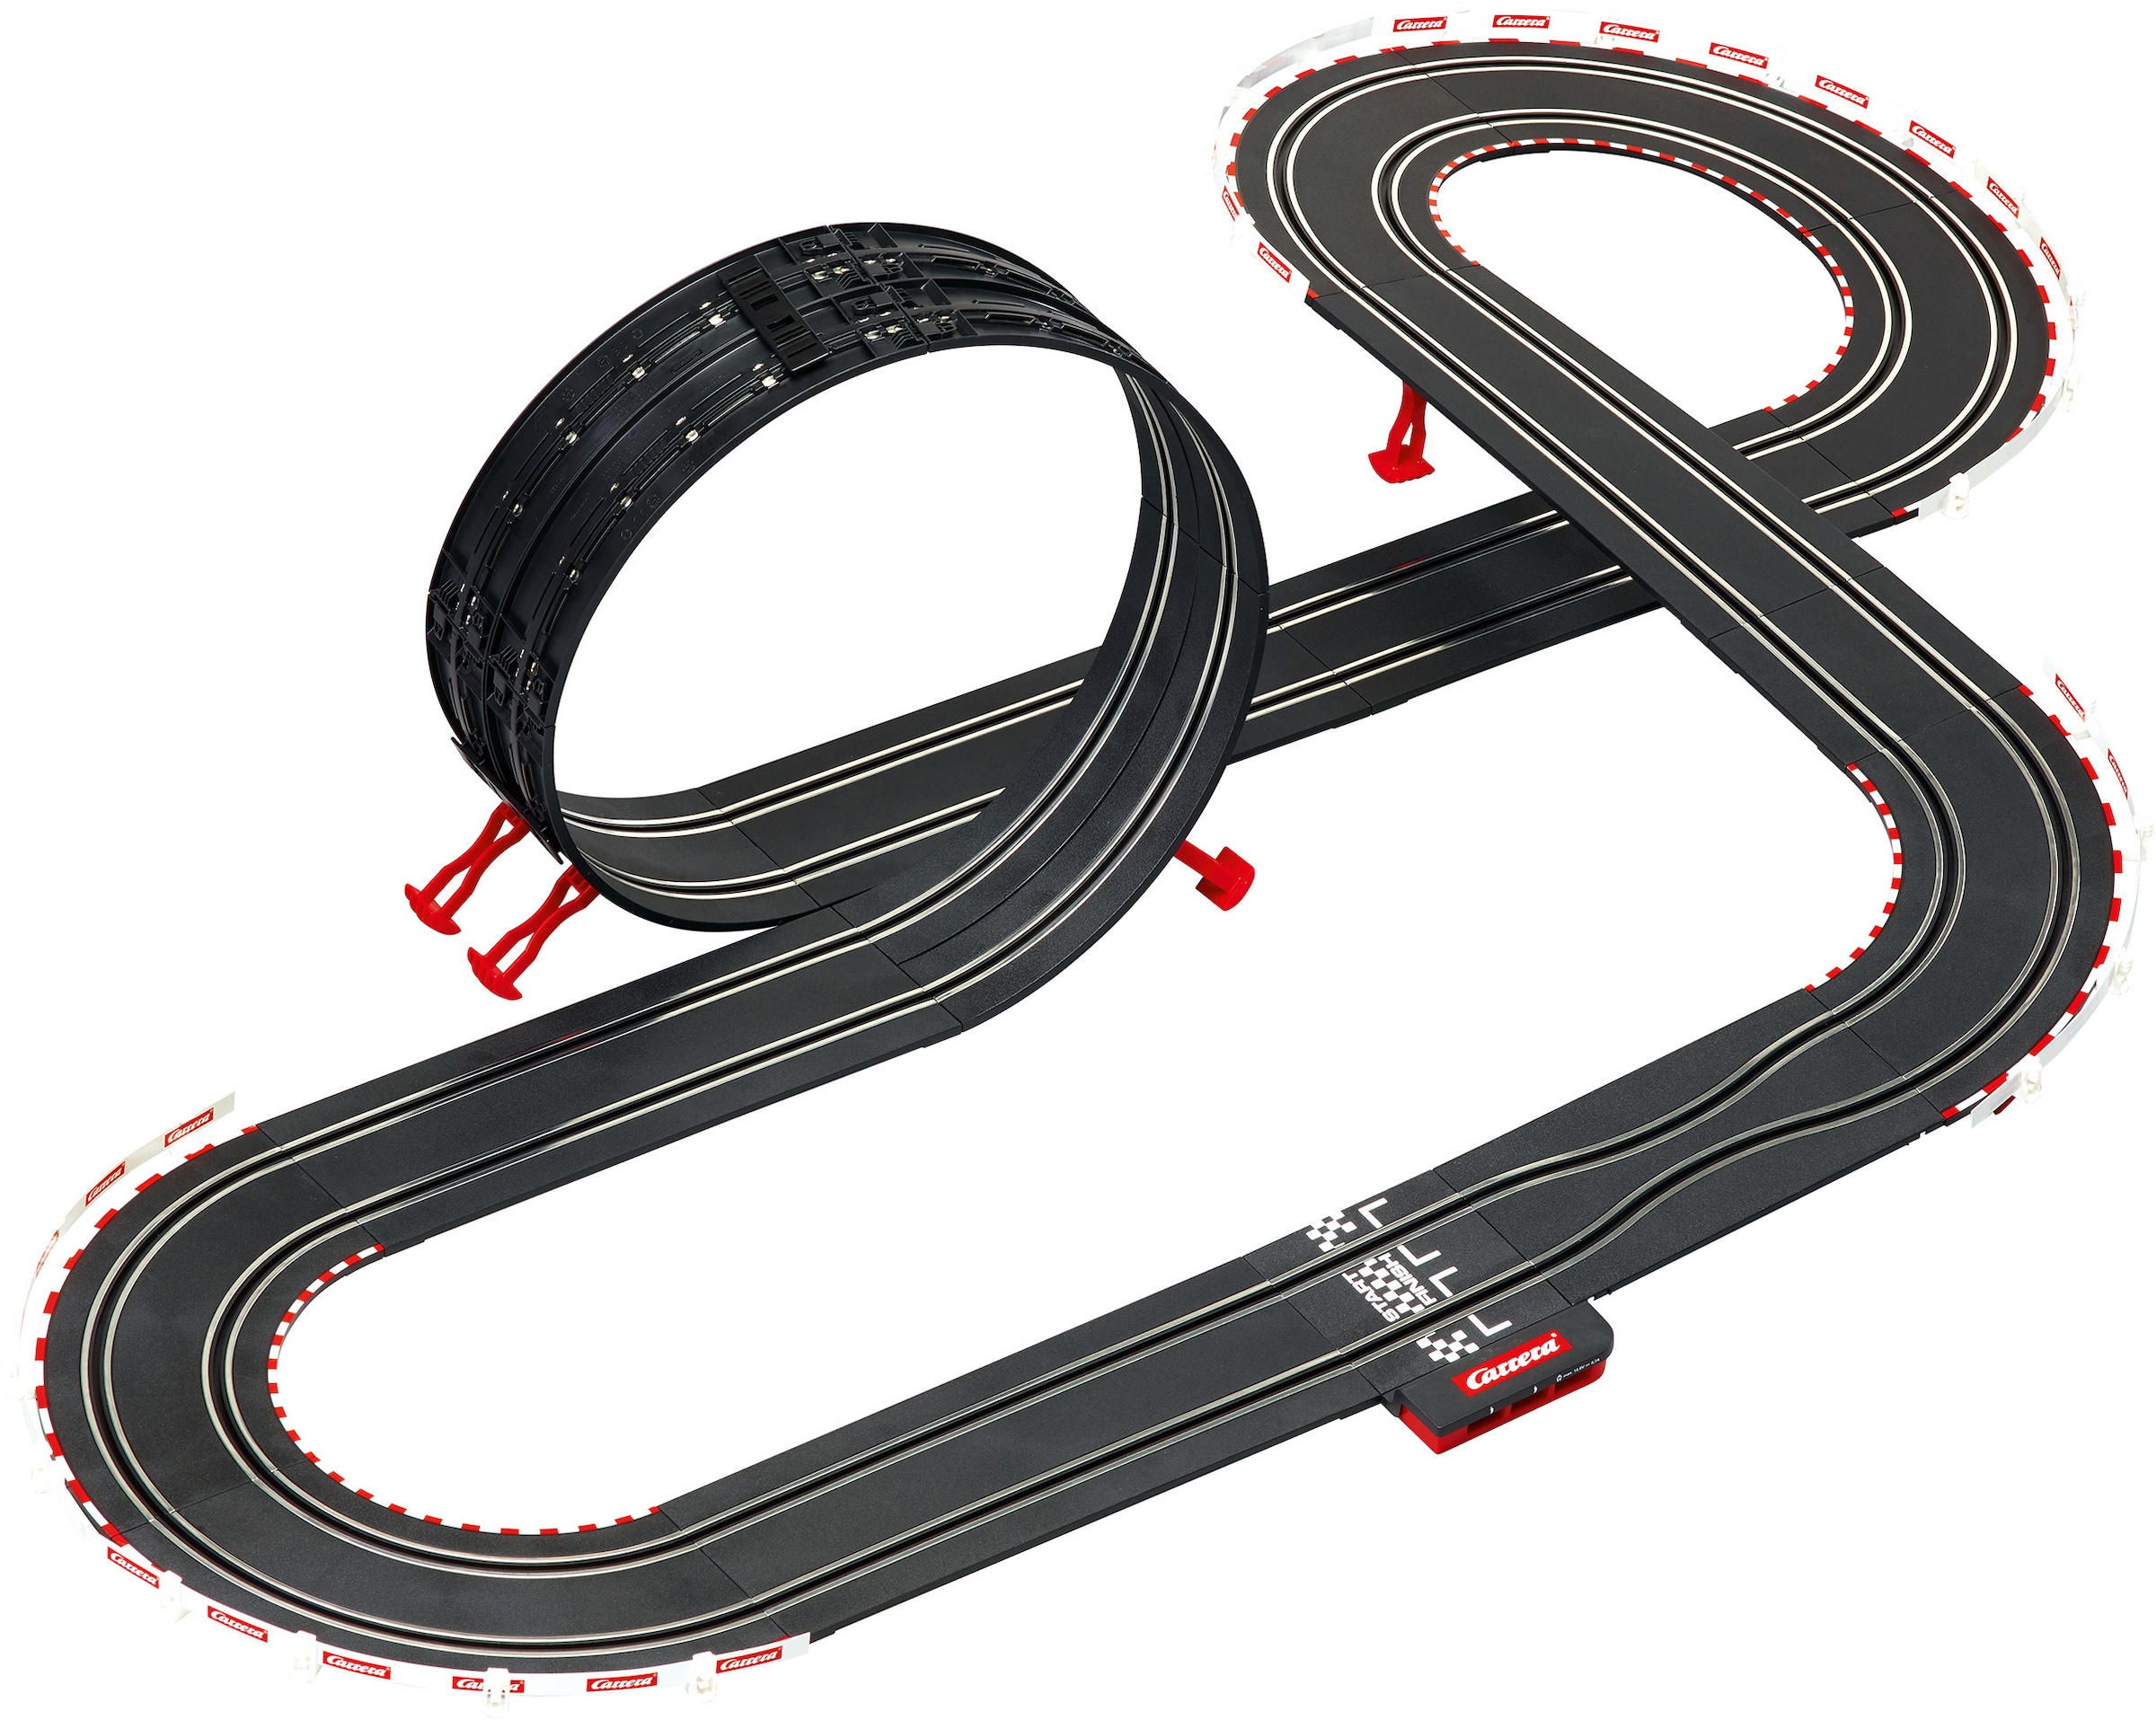 Carrera® Autorennbahn »Carrera GO!!! - Build 'n Race - Racing Set 4.9«